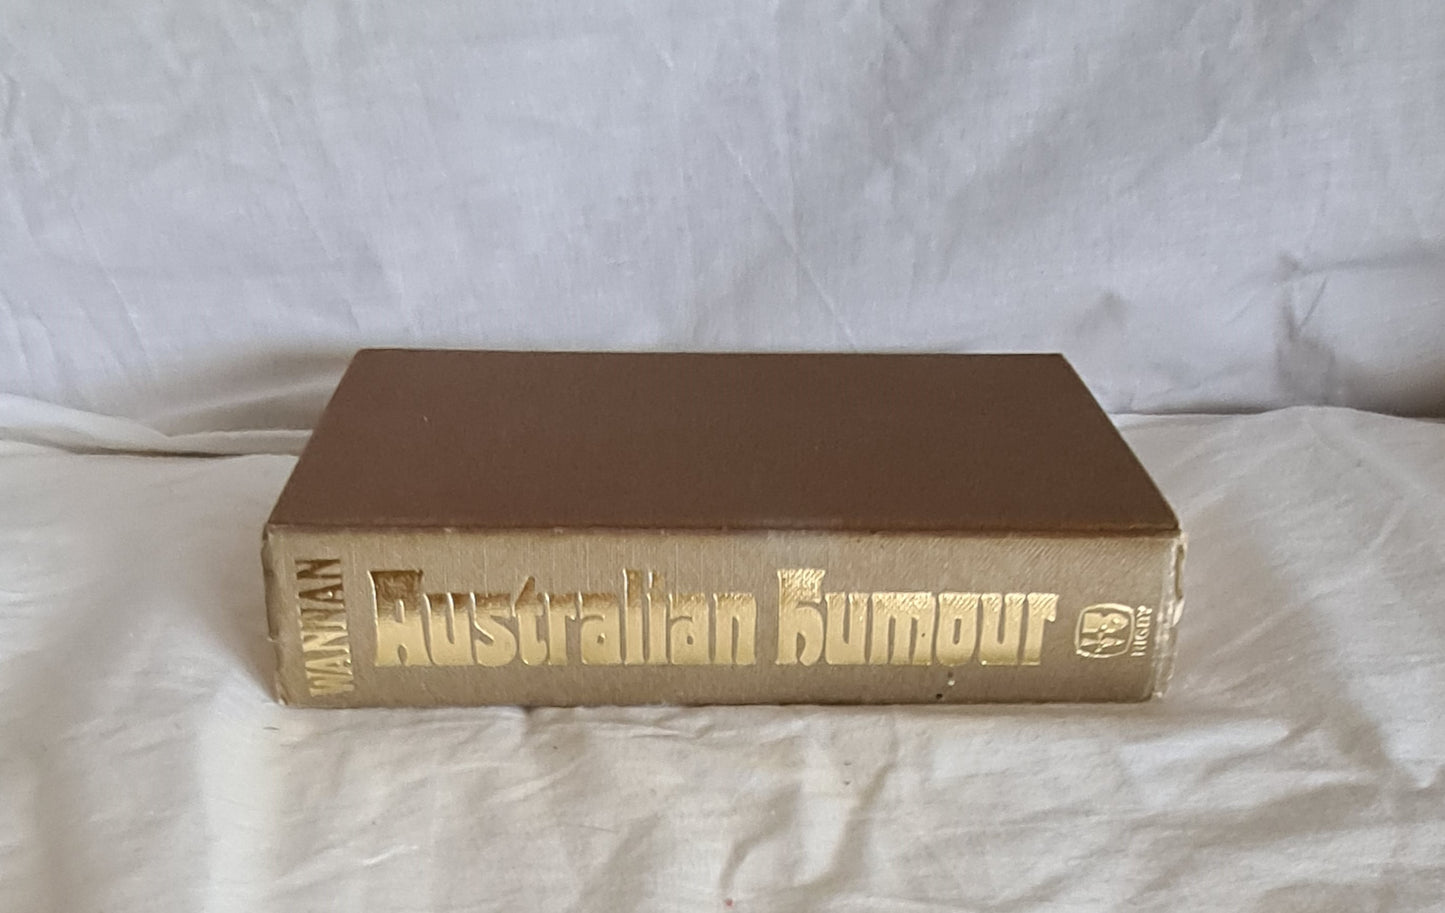 Bill Wannan’s Great Book of Australian Humour by Bill Wannan